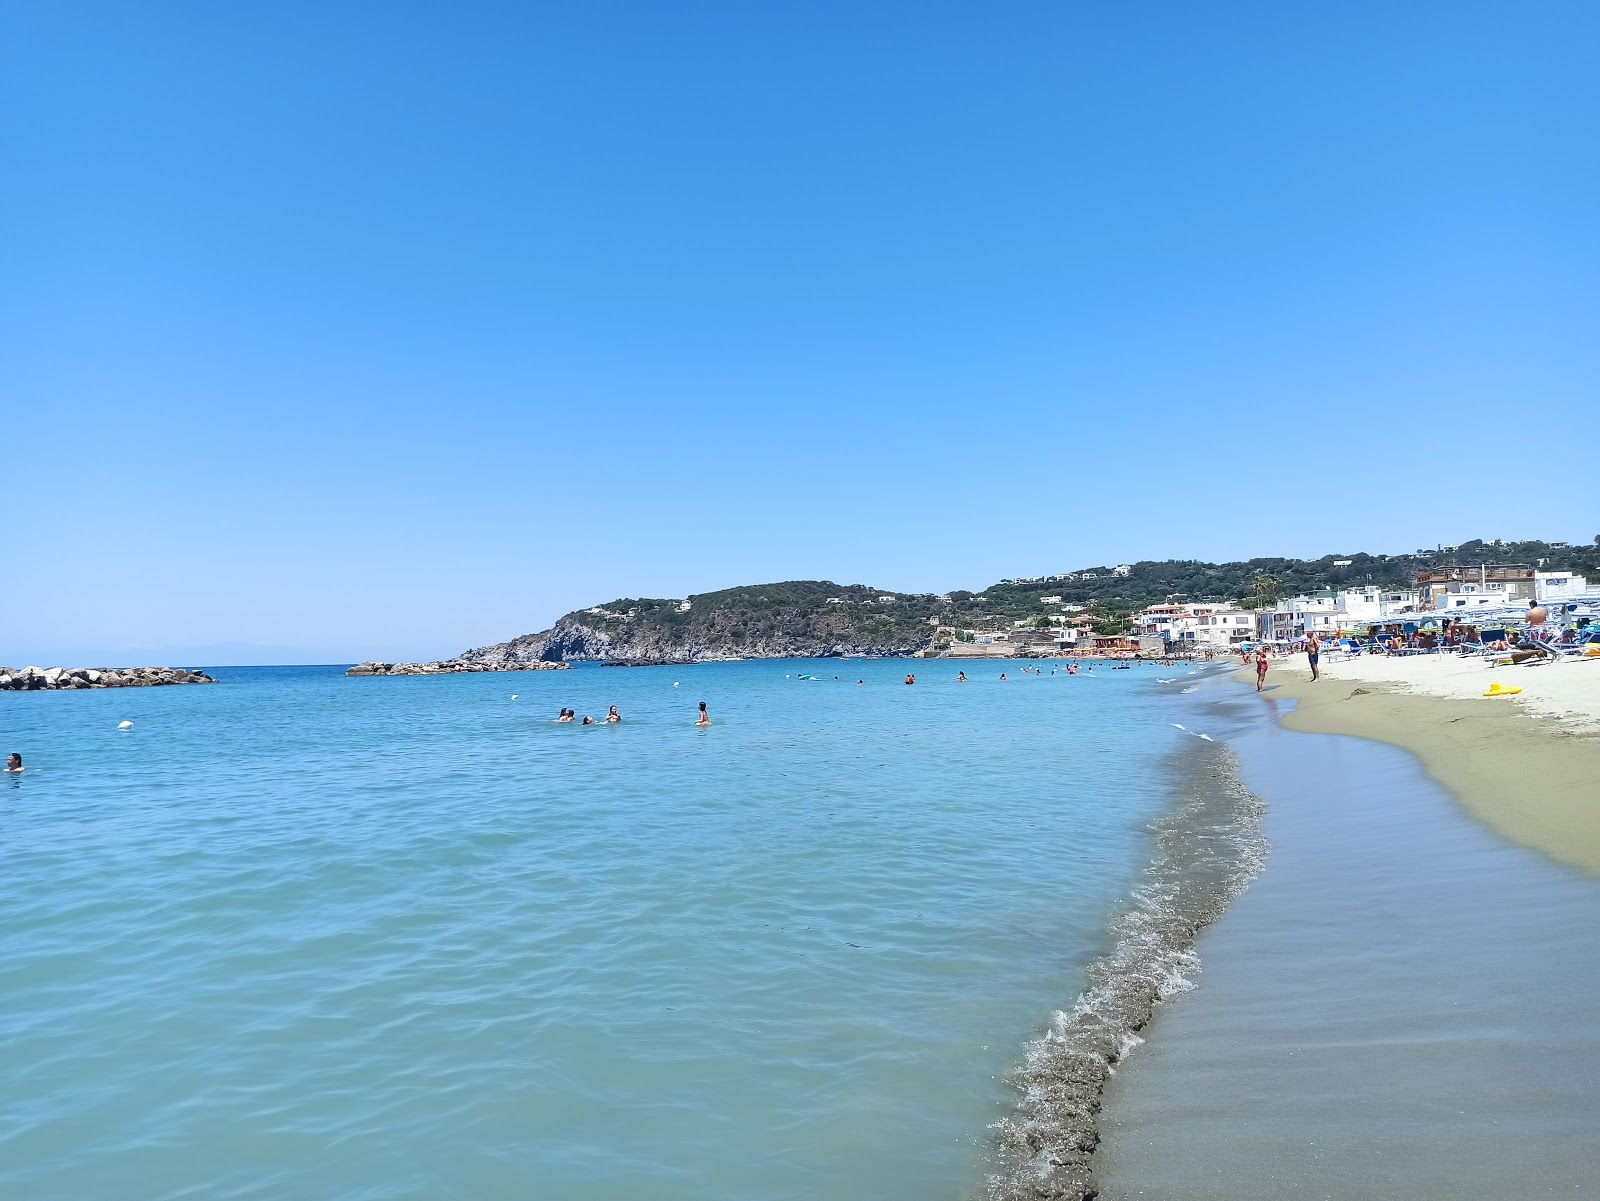 Foto van Spiaggia della Chiaia met hoog niveau van netheid